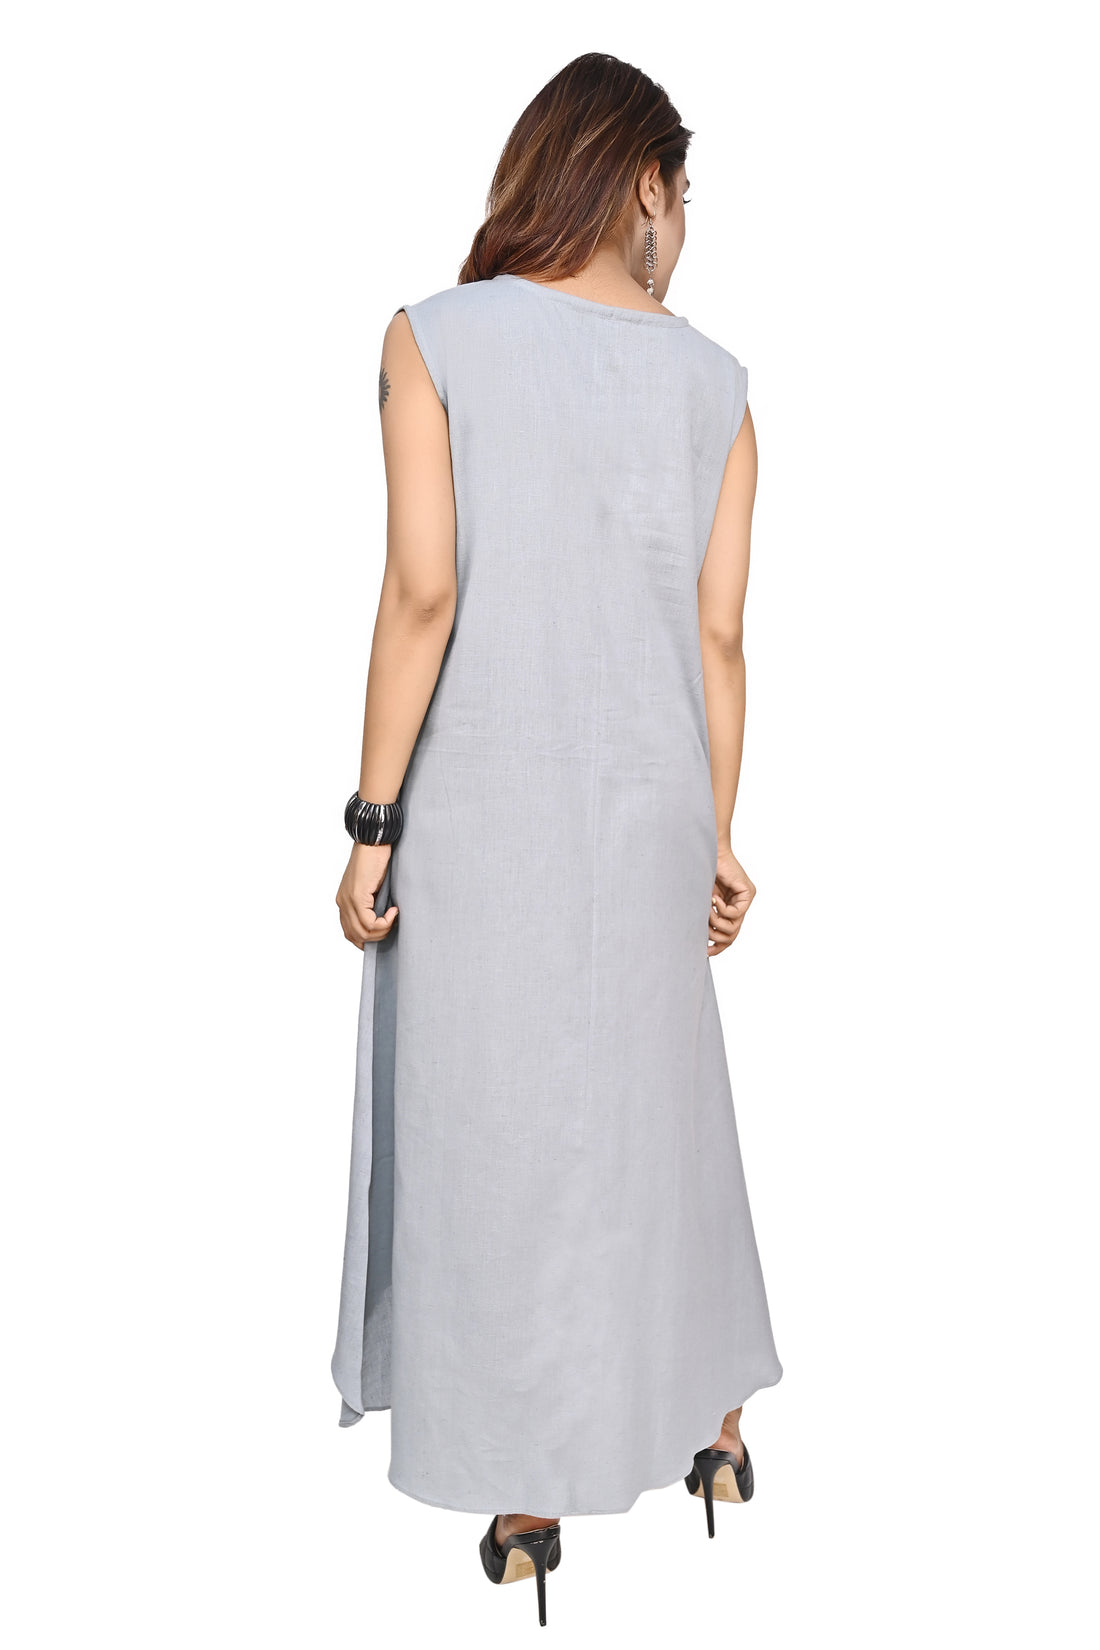 Nirmal online Premium Cotton Tunic Dress for Women in Grey Colour